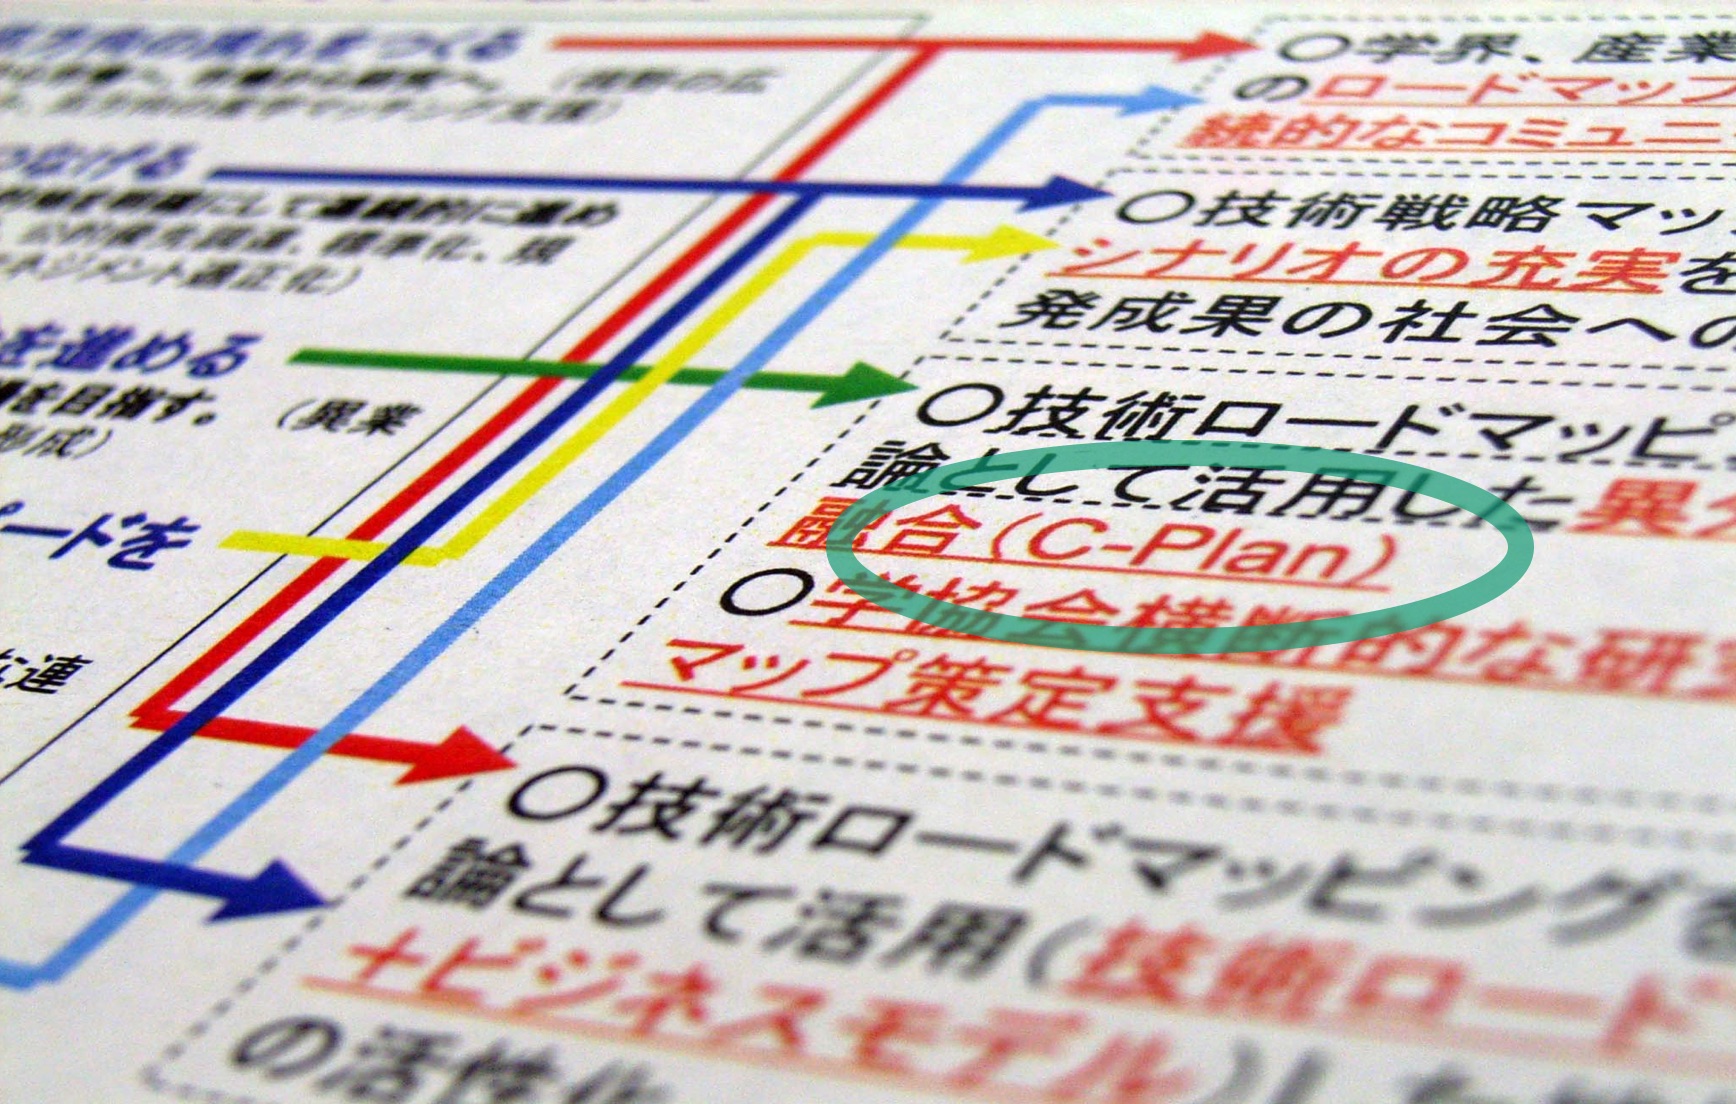  Japanese METI roadmap, Tokyo, 2005 